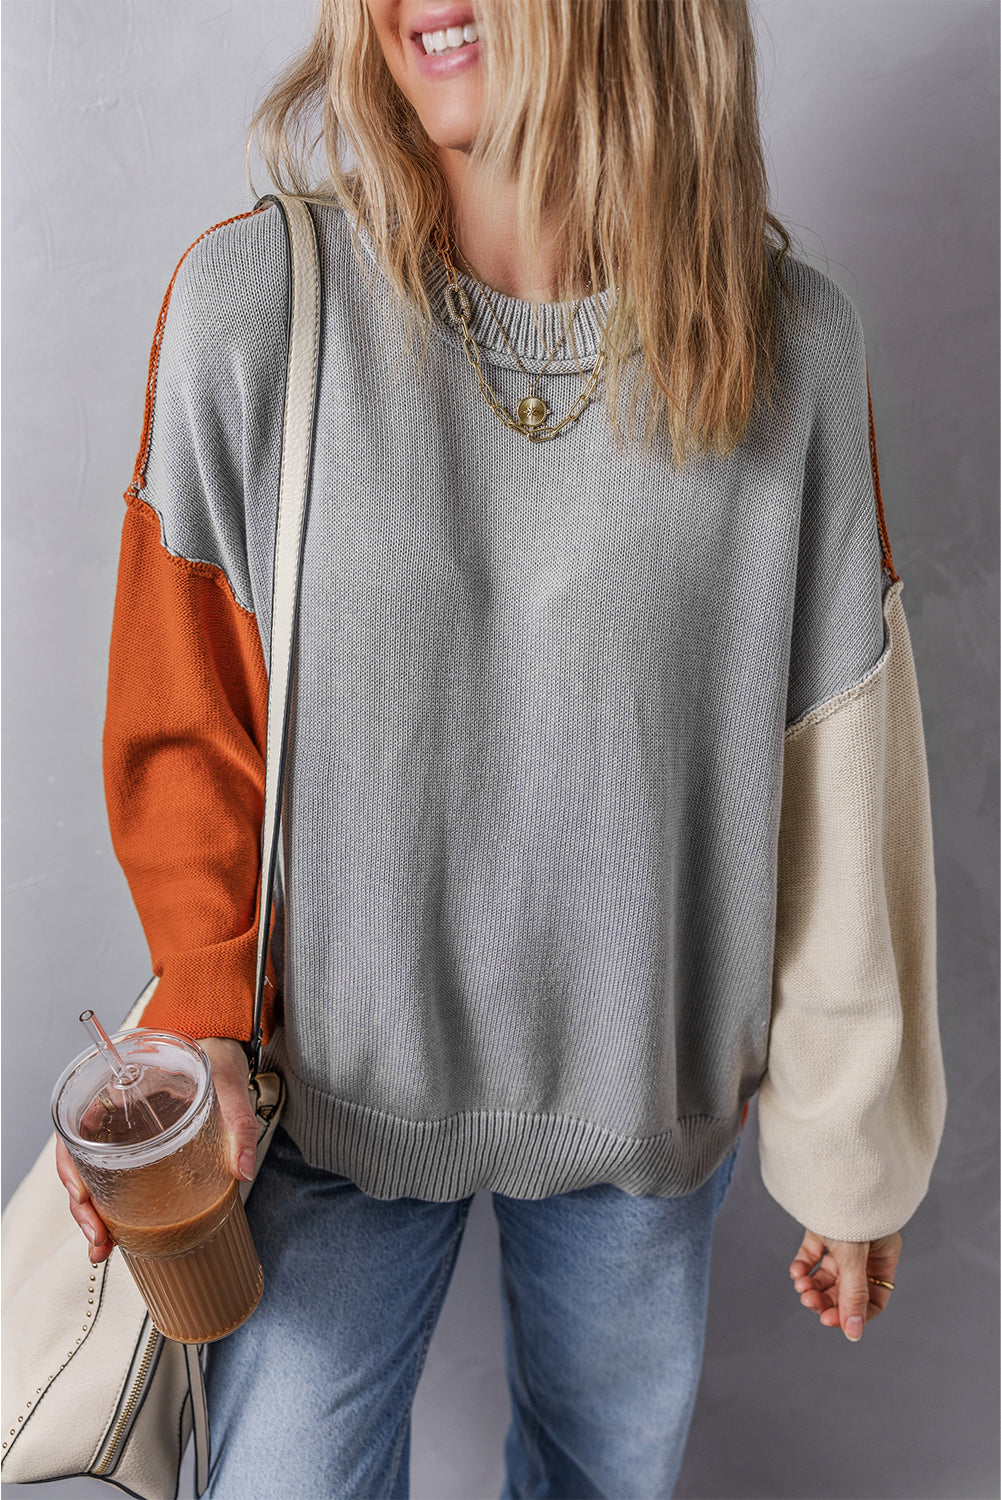 Coffee Leopard Print Colorblock Pullover Sweater